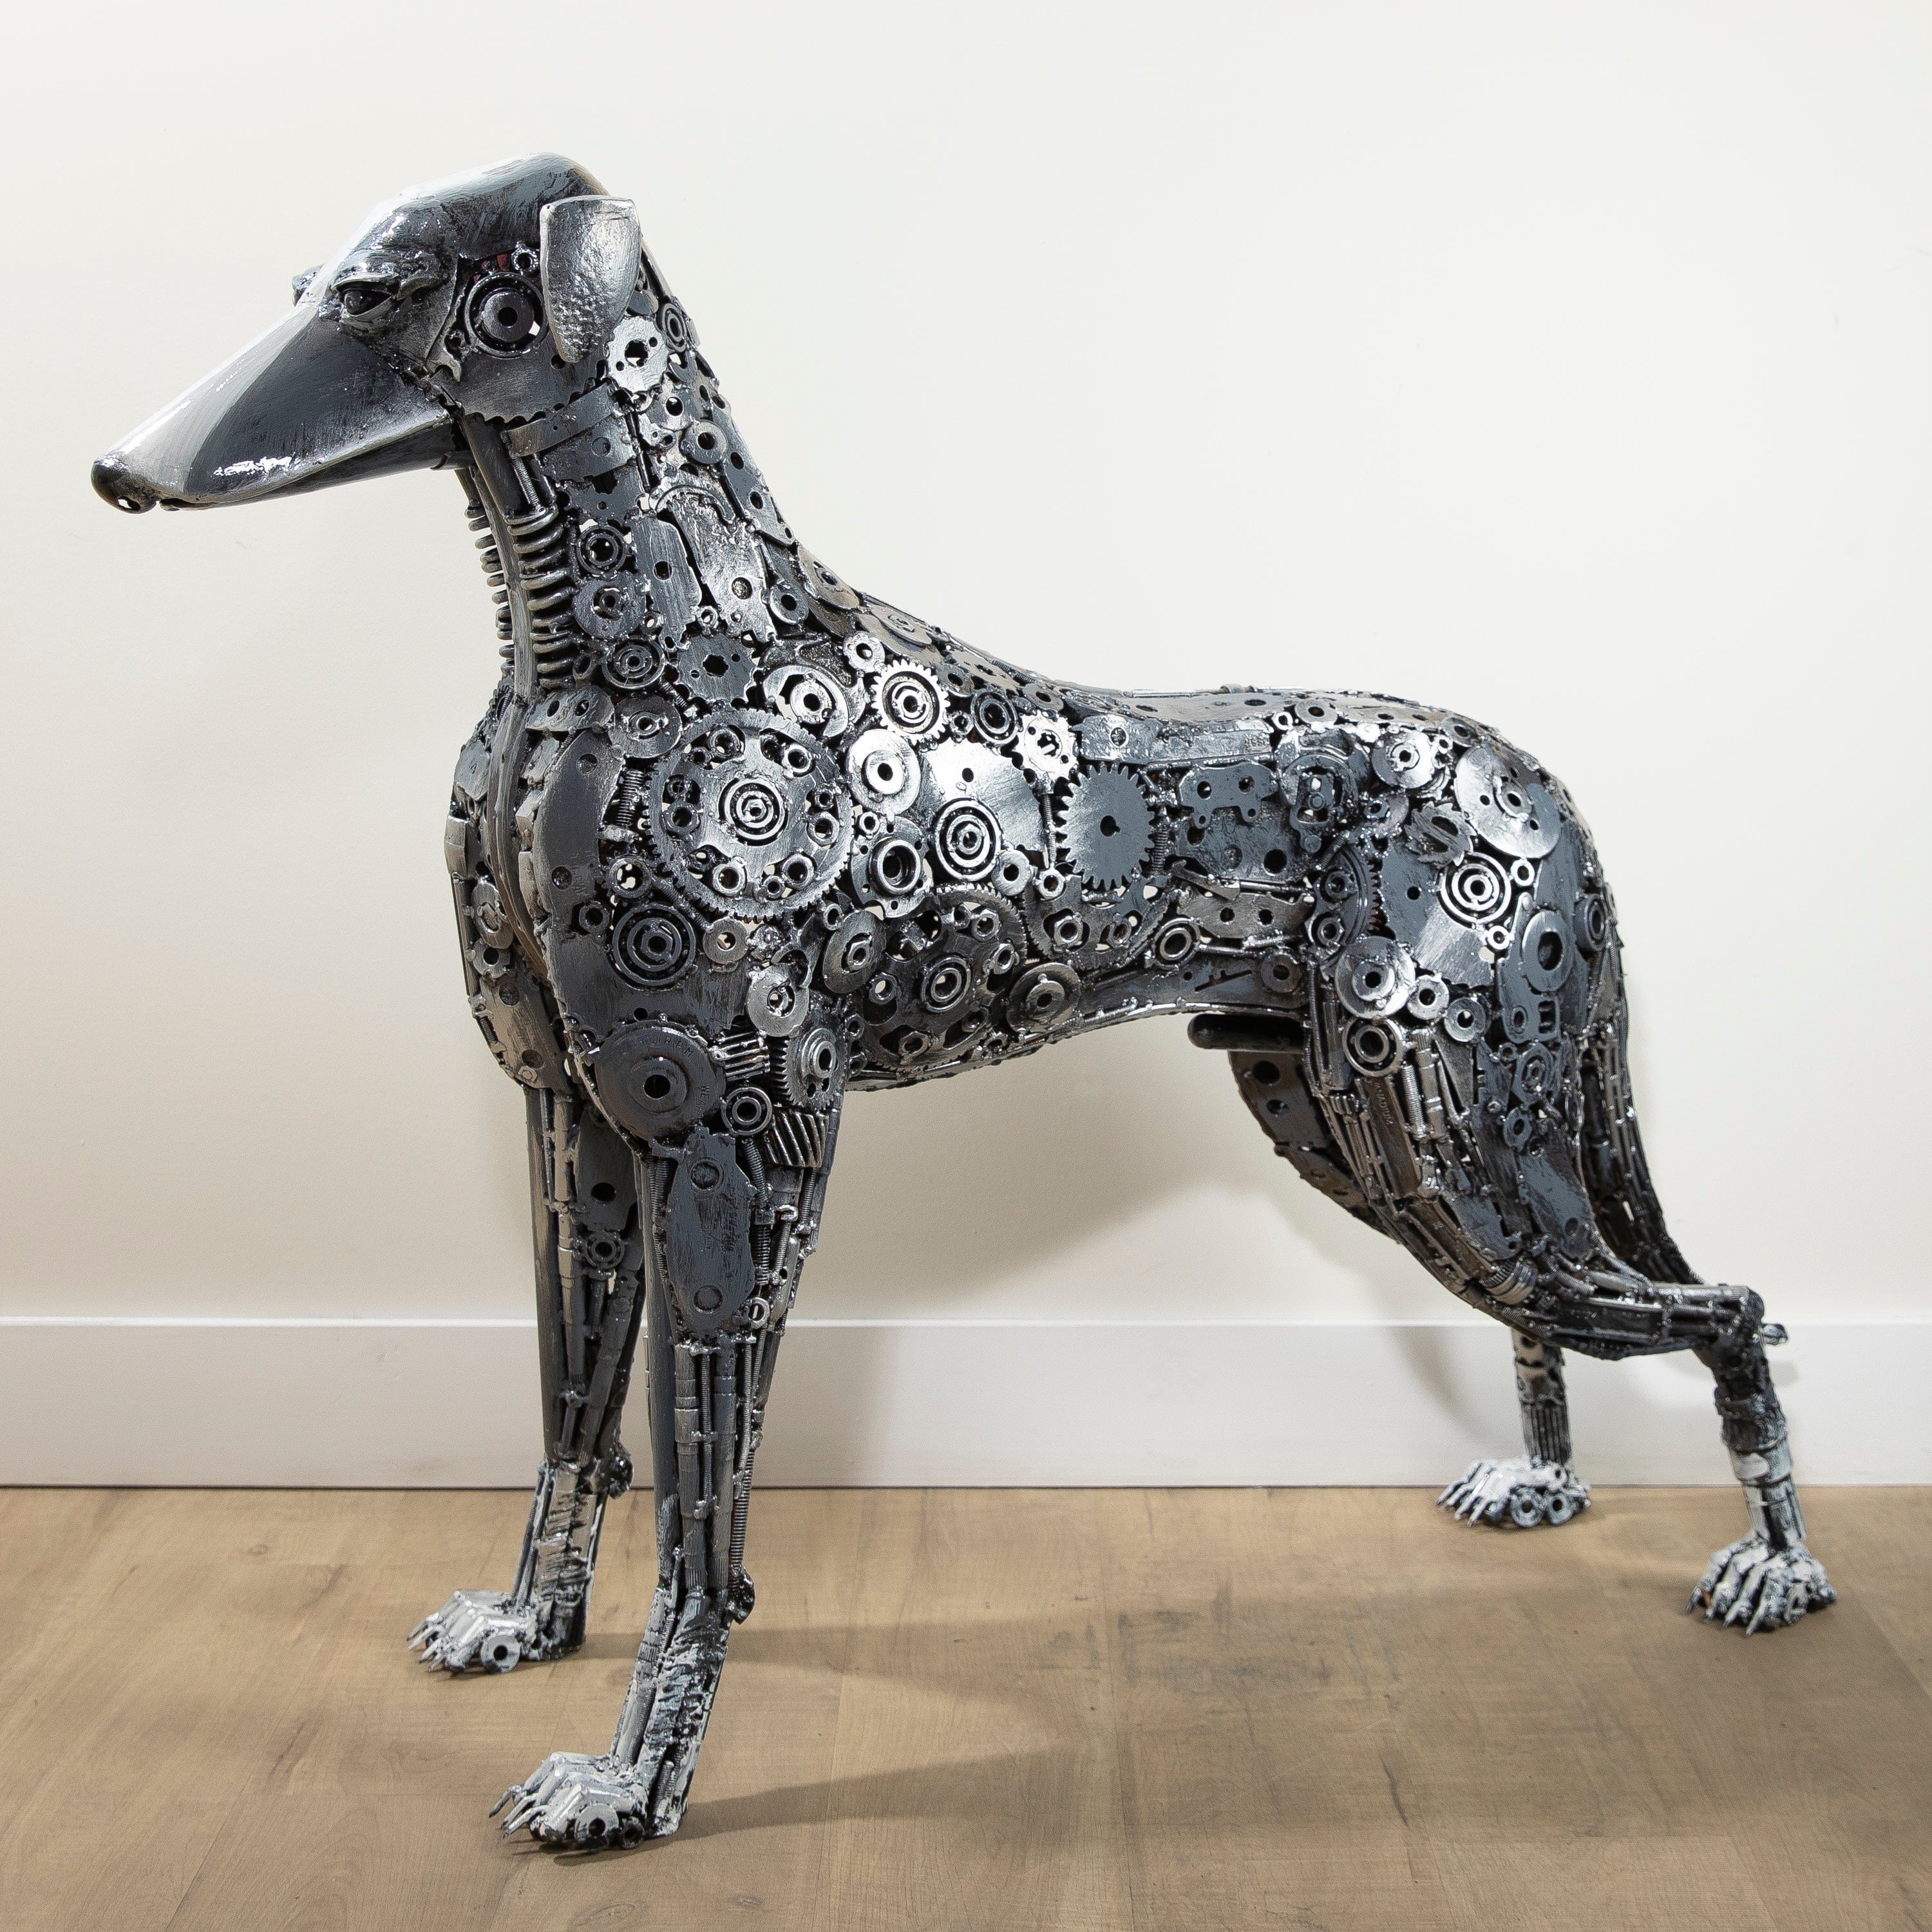 Kalifano Recycled Metal Art 40" Greyhound Dog Inspired Recycled Metal Art Sculpture RMS-GHDOG100-P